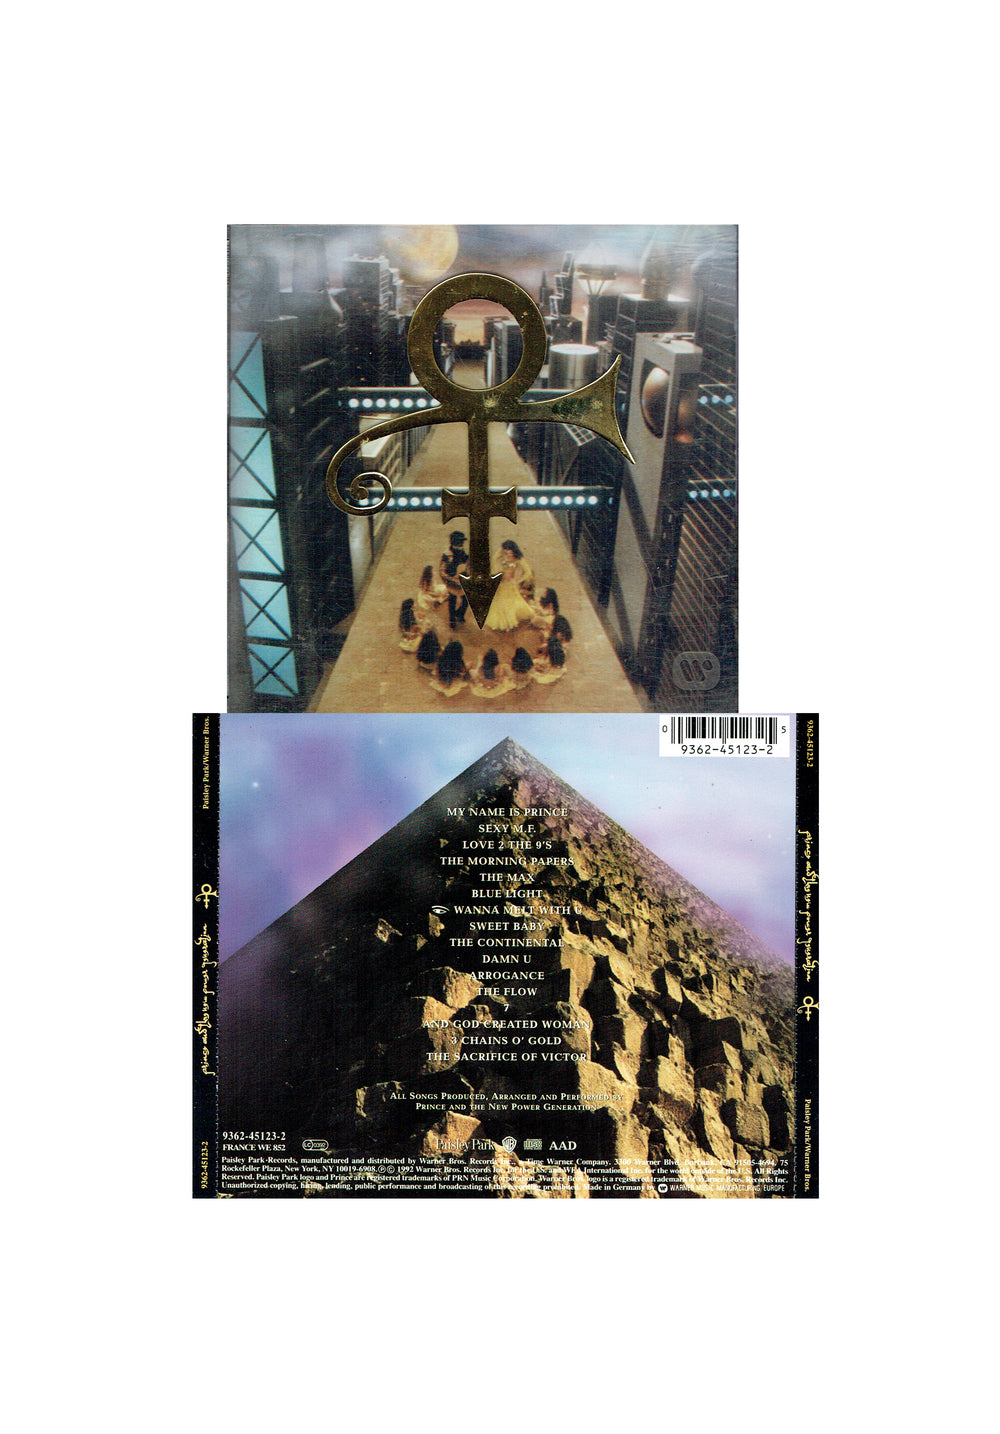 Prince Love Symbol Etched Symbol Case CD Album 1992 Hype Sticker & BRIT AWARDS